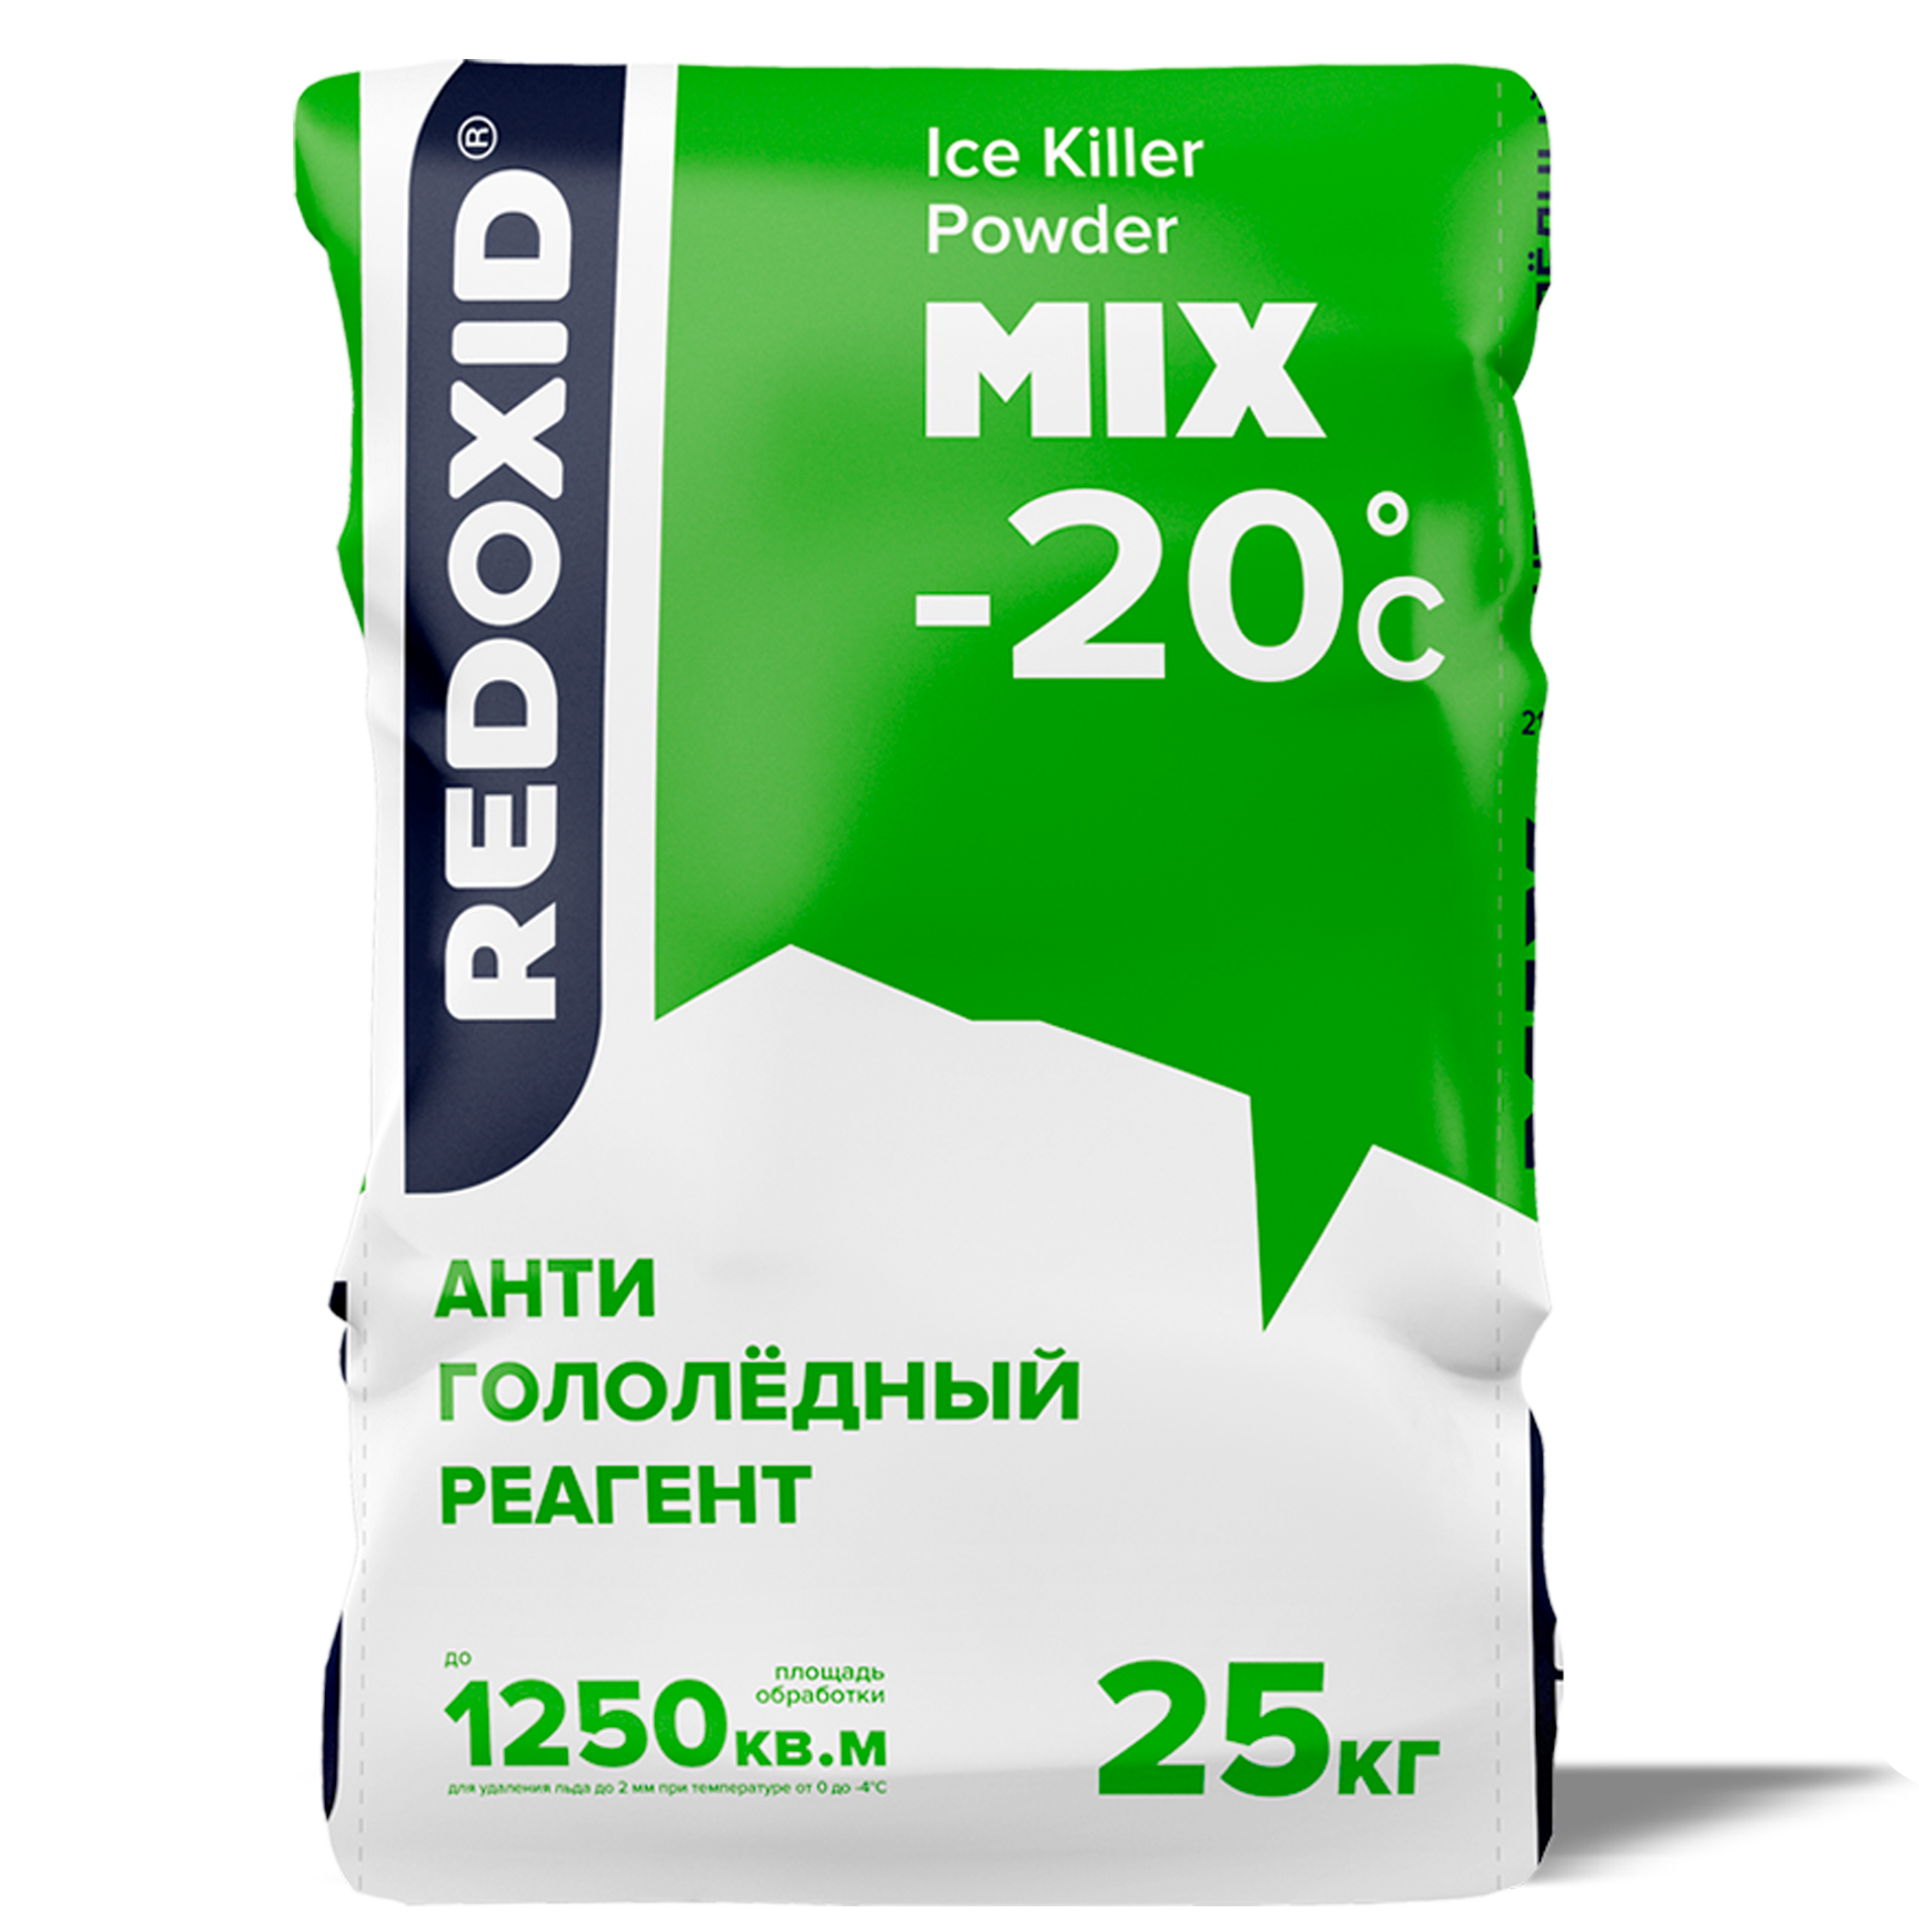 2105-25 • Ice Killer Powder Mix (Айс Киллер Паудер Микс) 25кг, Антигололёдный реагент для t не ниже